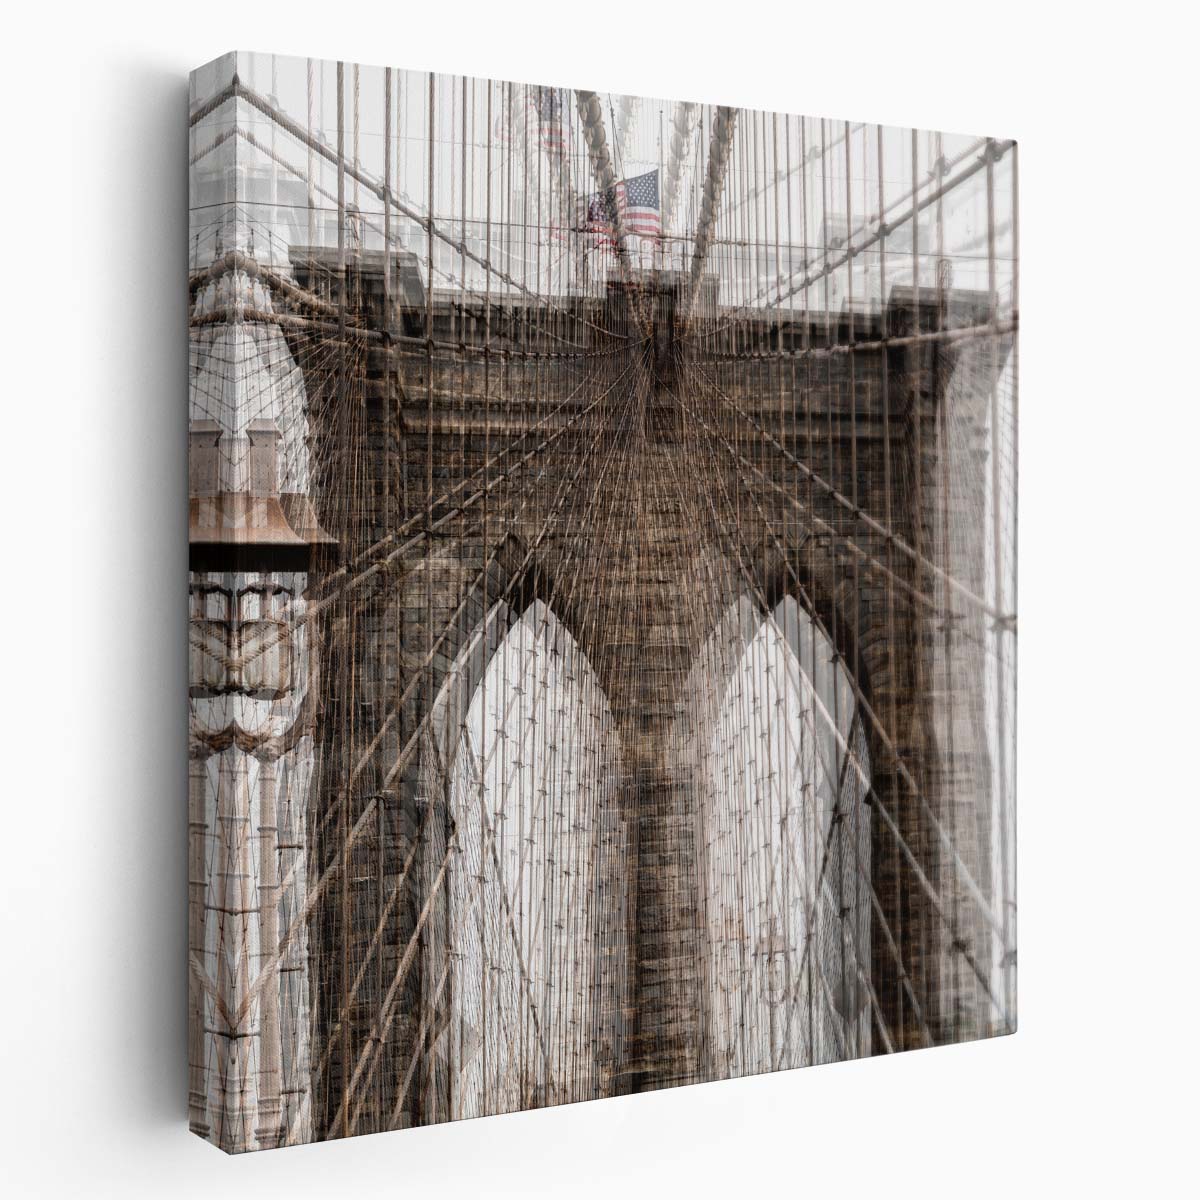 Iconic Brooklyn Bridge NYC USA Landmark Photography Wall Art by Luxuriance Designs. Made in USA.